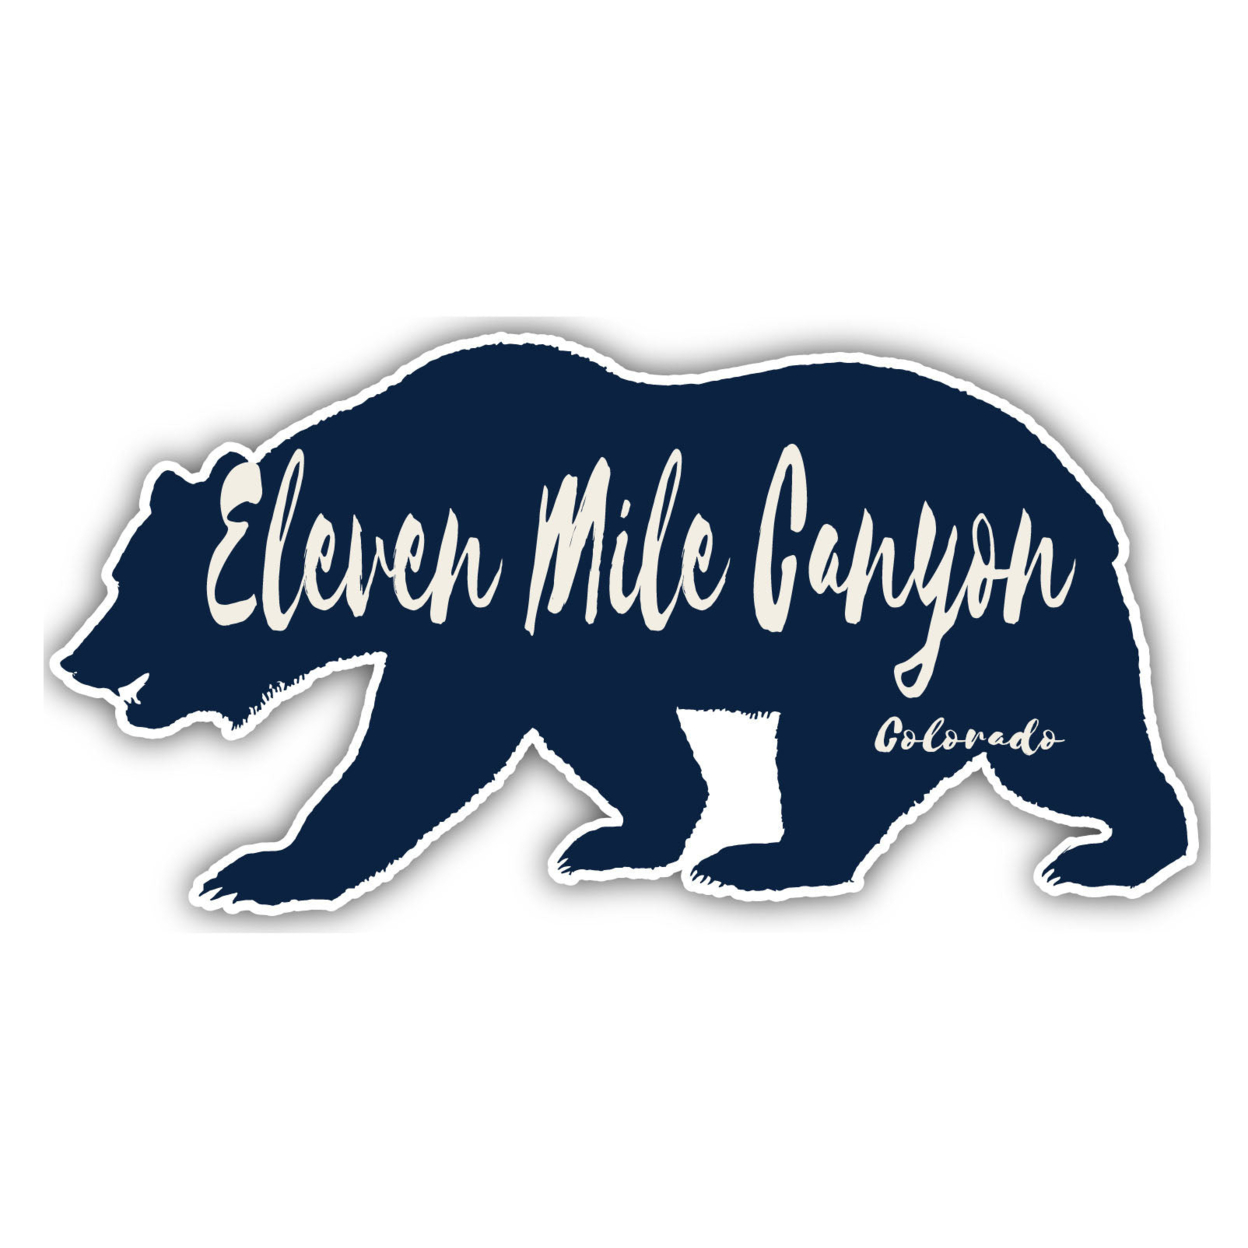 Eleven Mile Canyon Colorado Souvenir Decorative Stickers (Choose Theme And Size) - Single Unit, 10-Inch, Camp Life